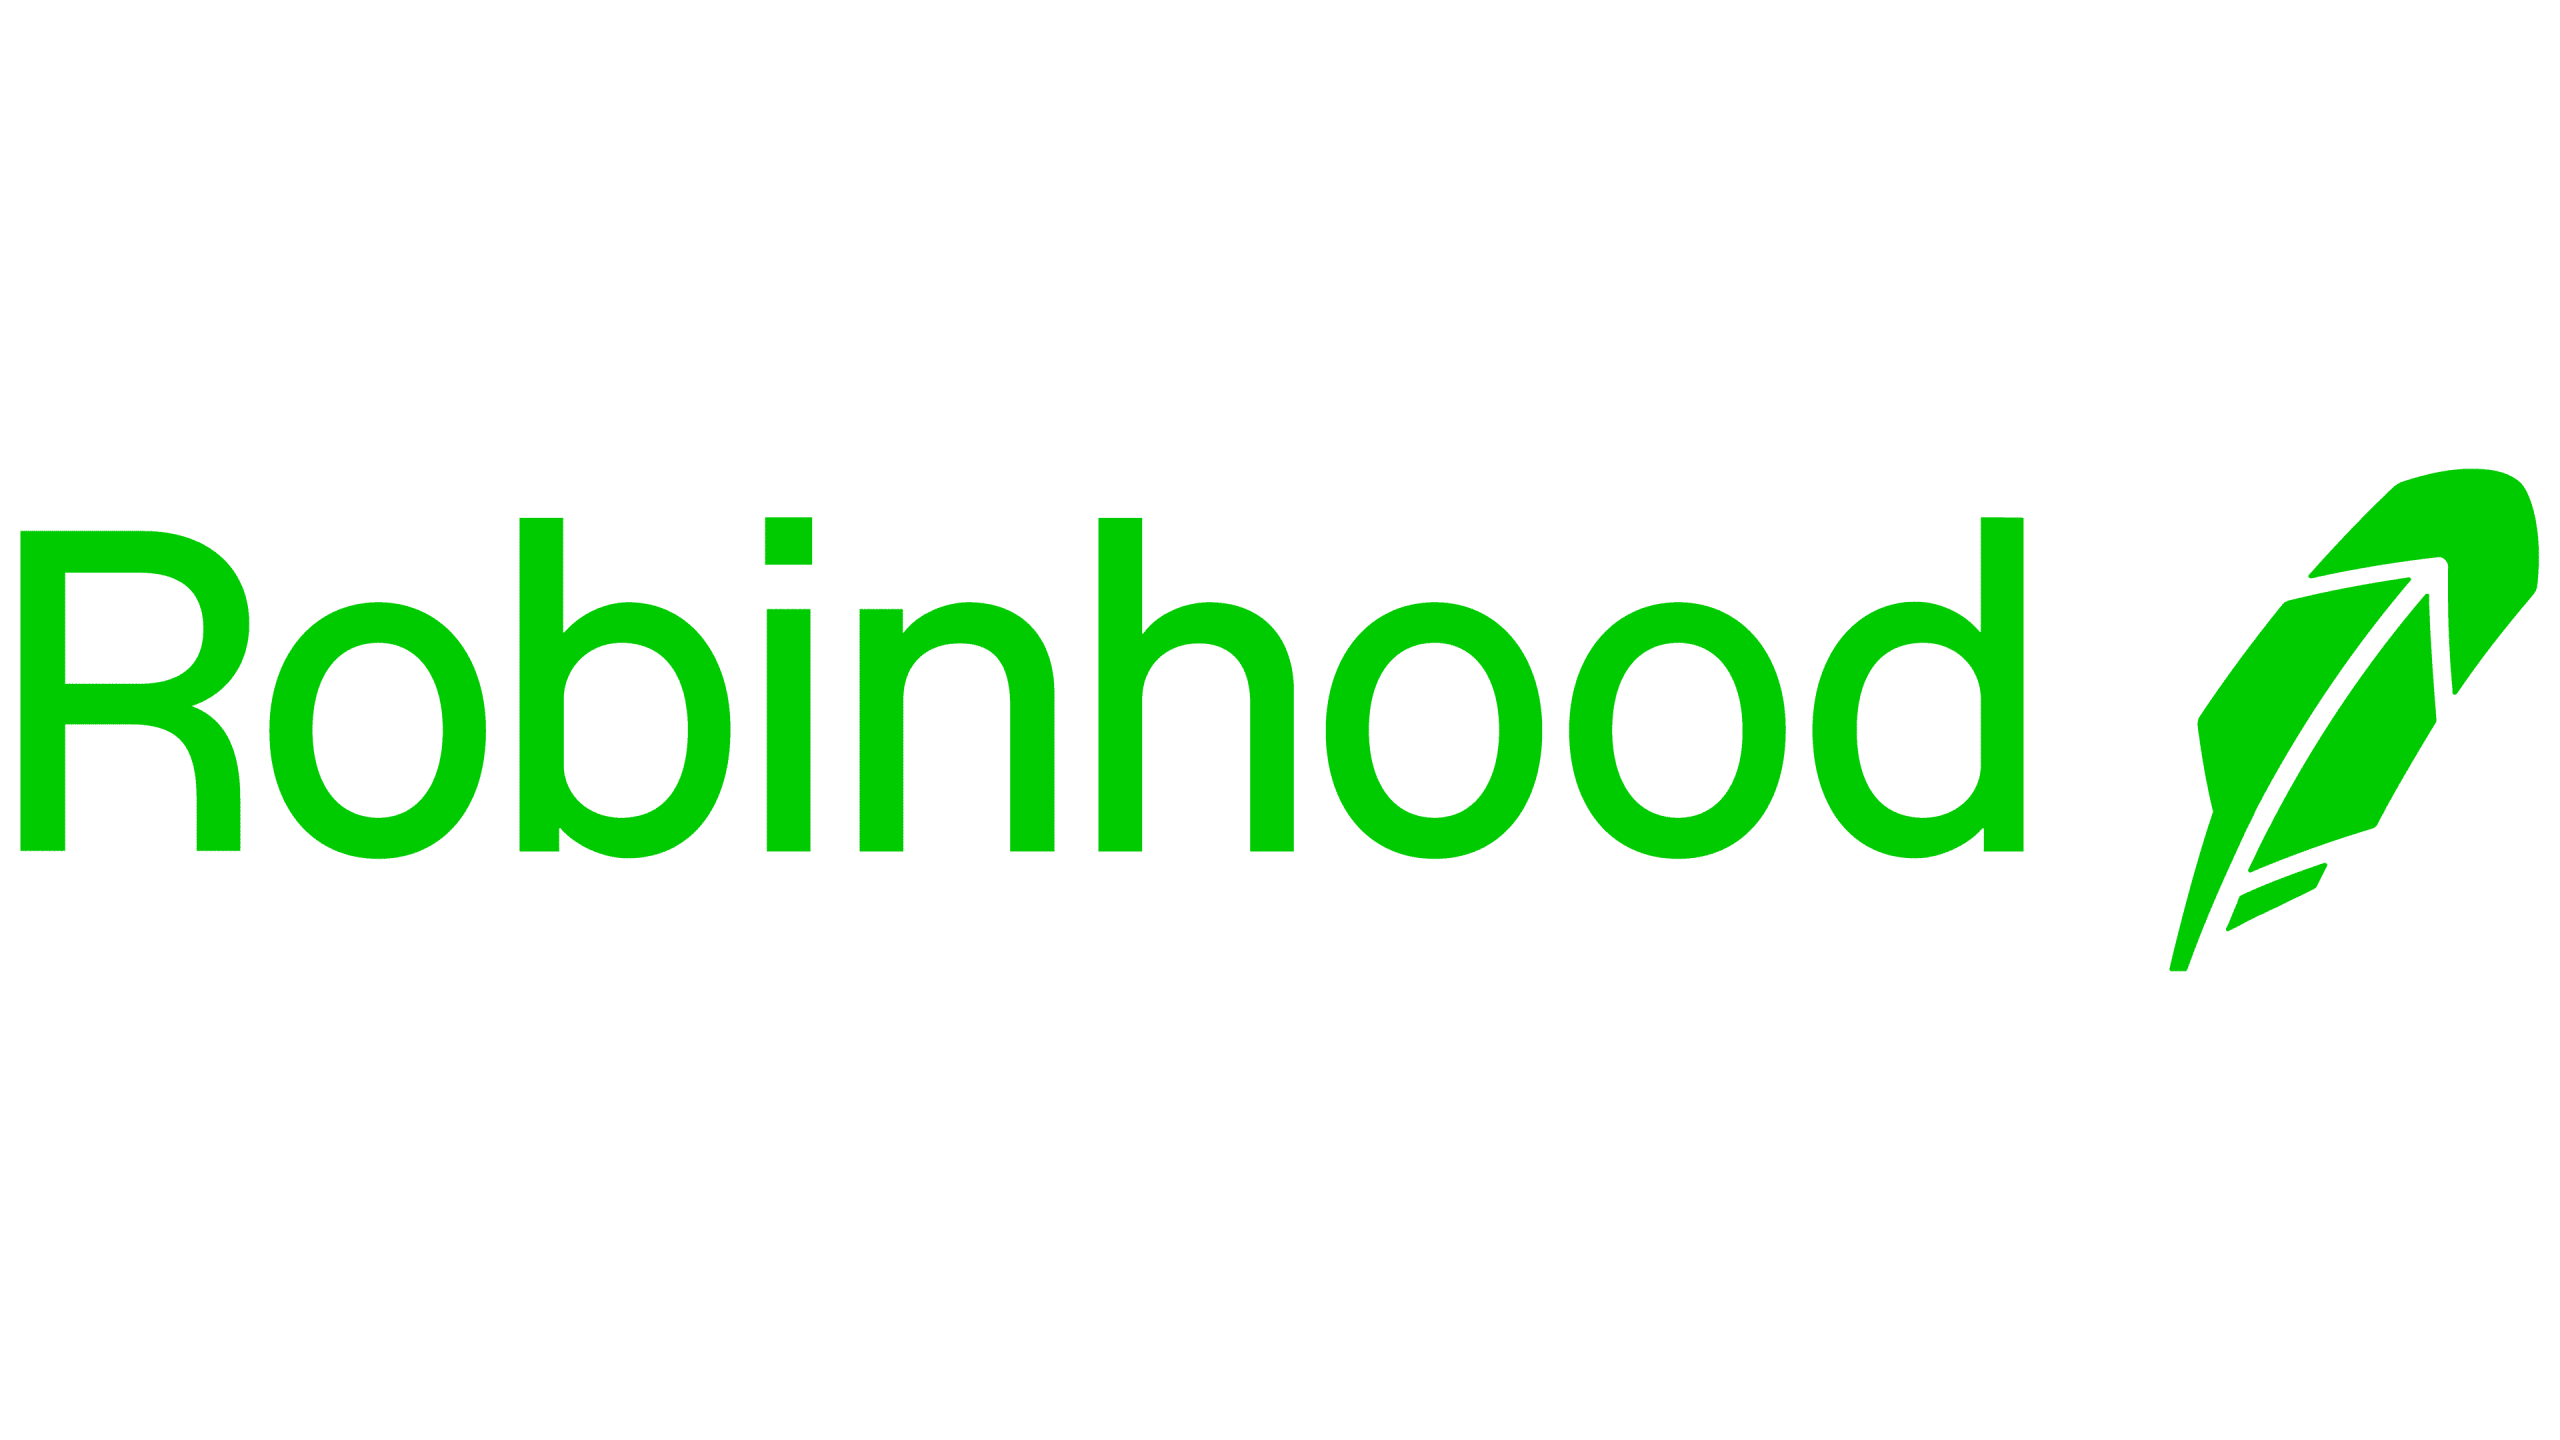 robinhood review